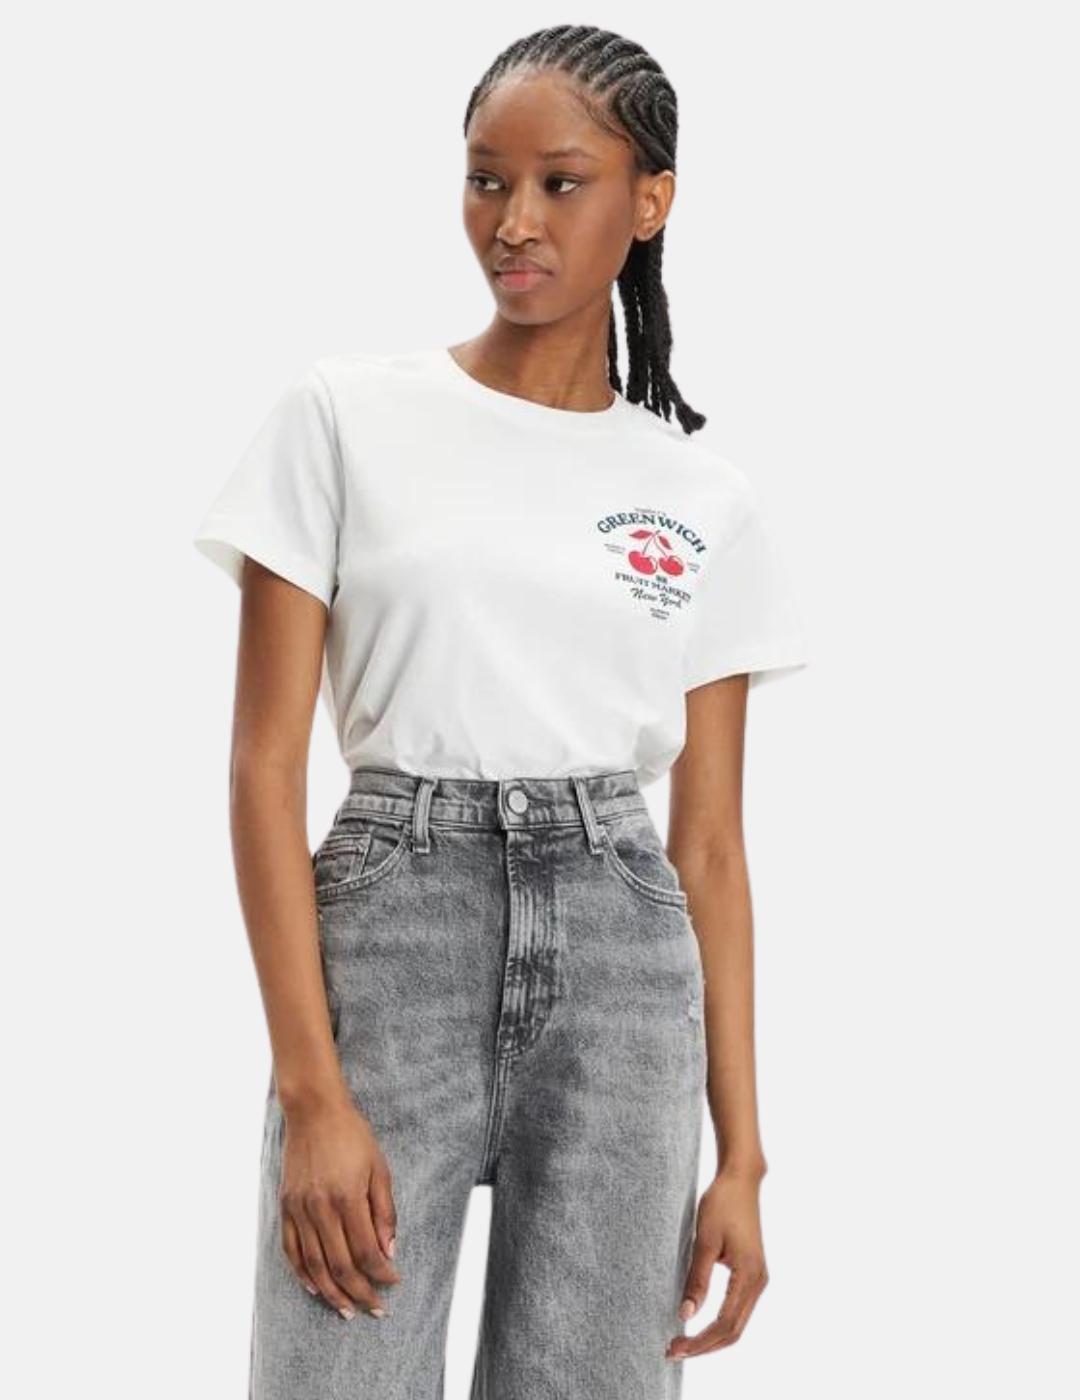 Camiseta Tommy Jeans blanca logo fruit mujer